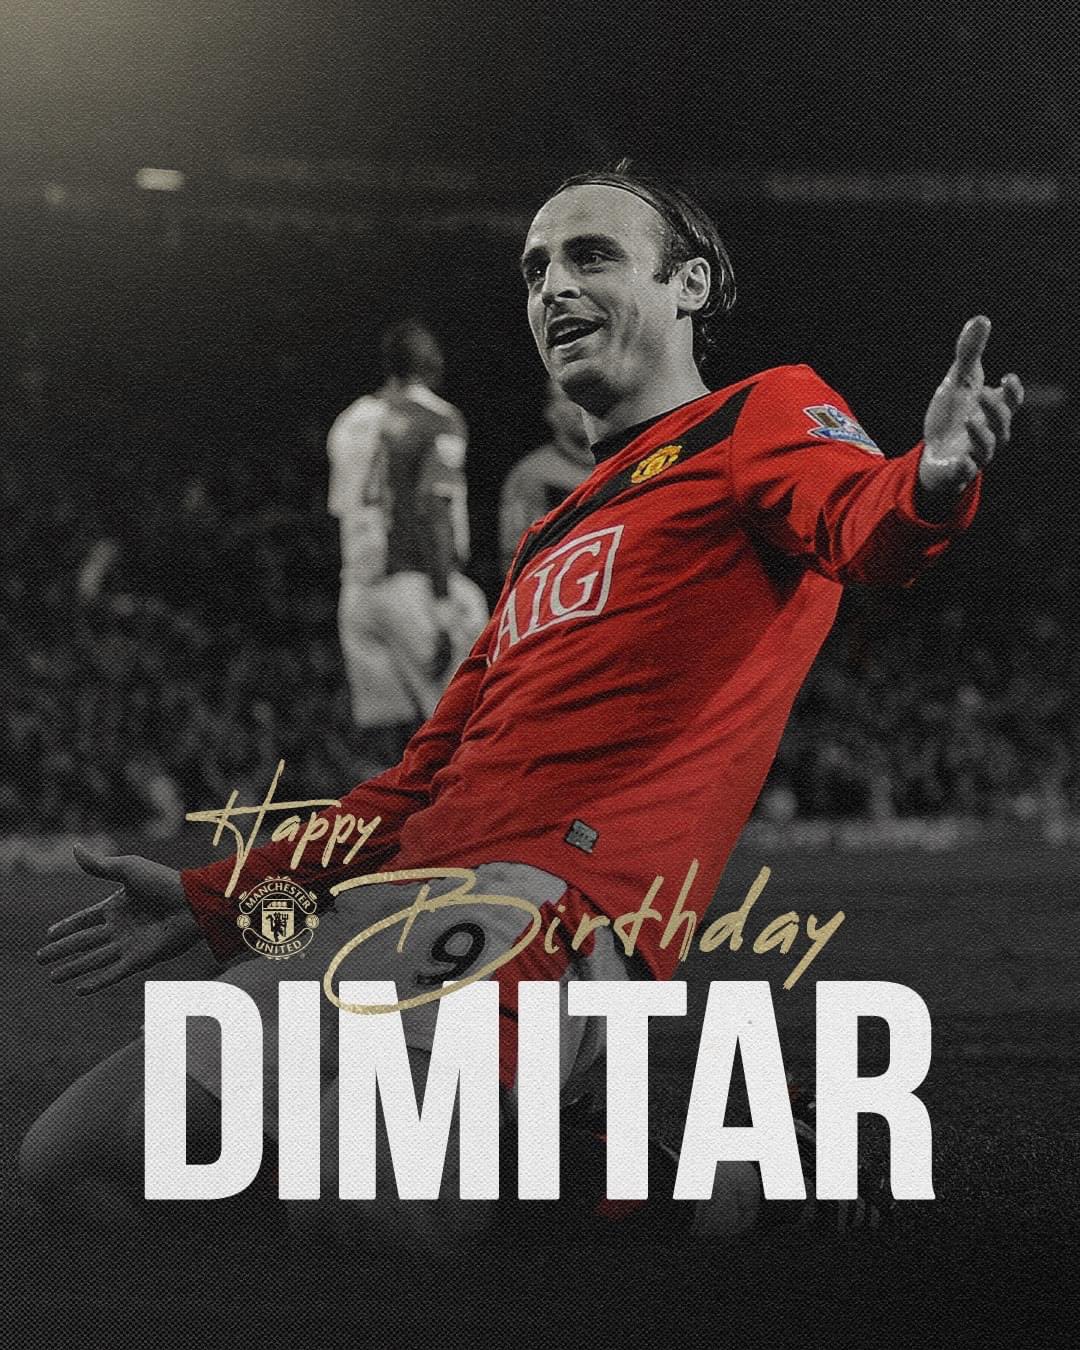  Wishing Dimitar Berbatov a very happy birthday! 